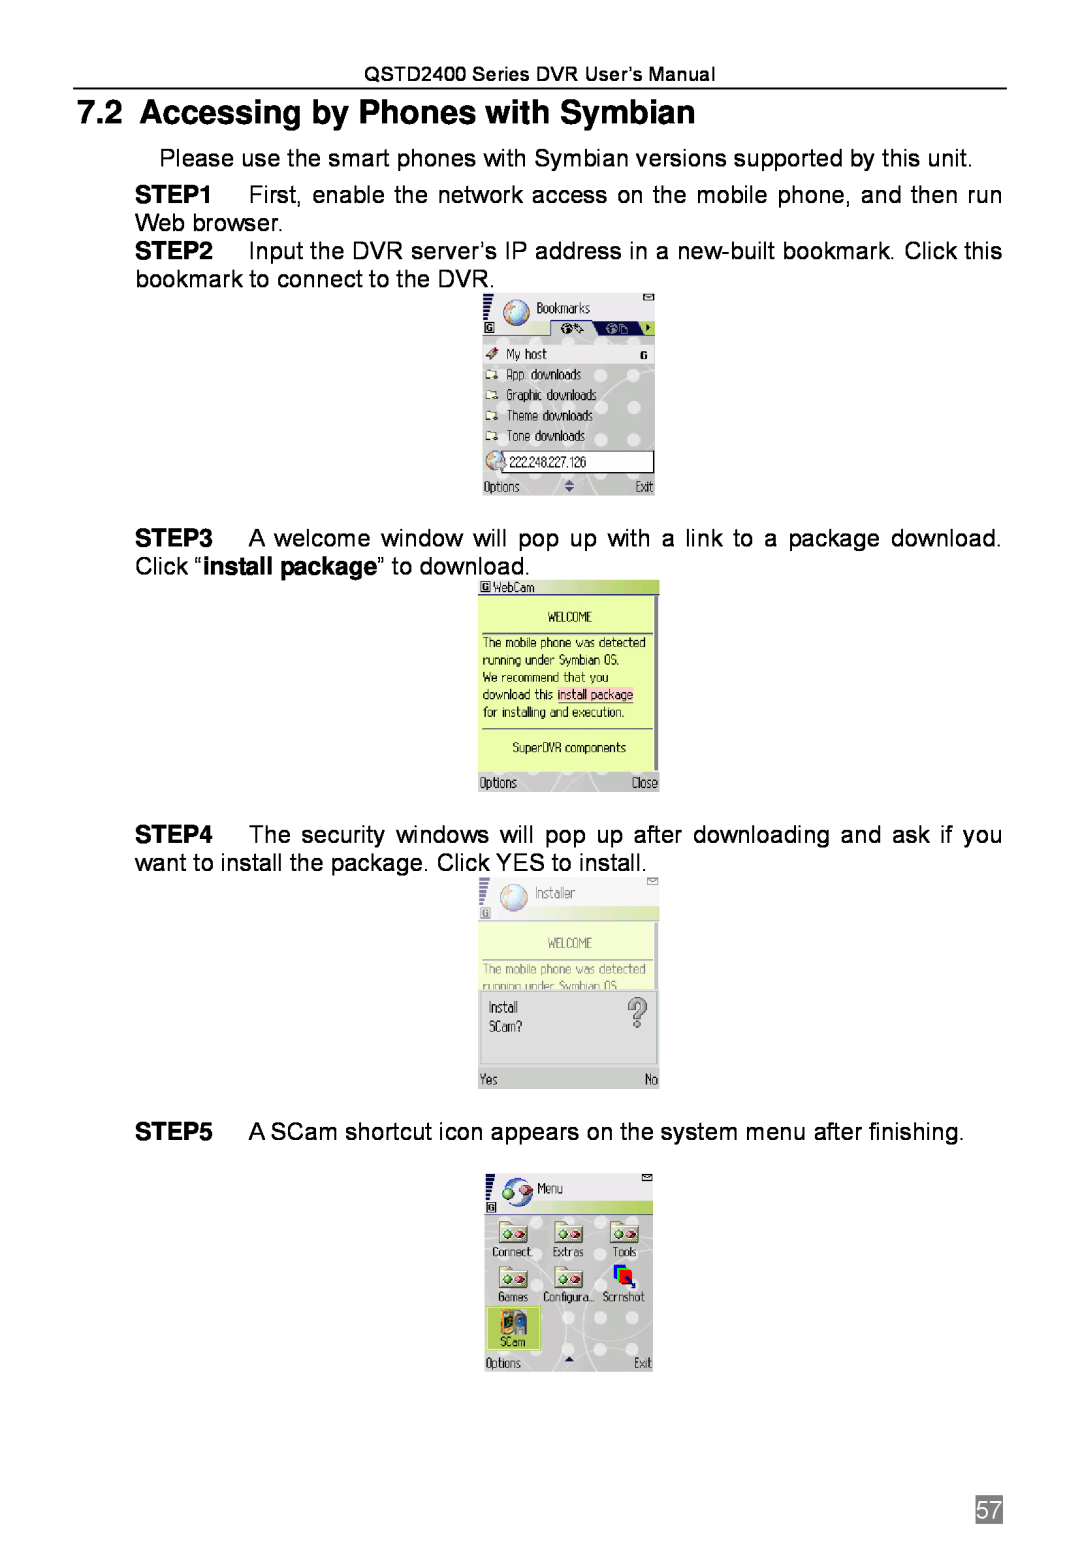 Q-See QSTD2408, QSTD2416, QSTD2404 user manual Accessing by Phones with Symbian 